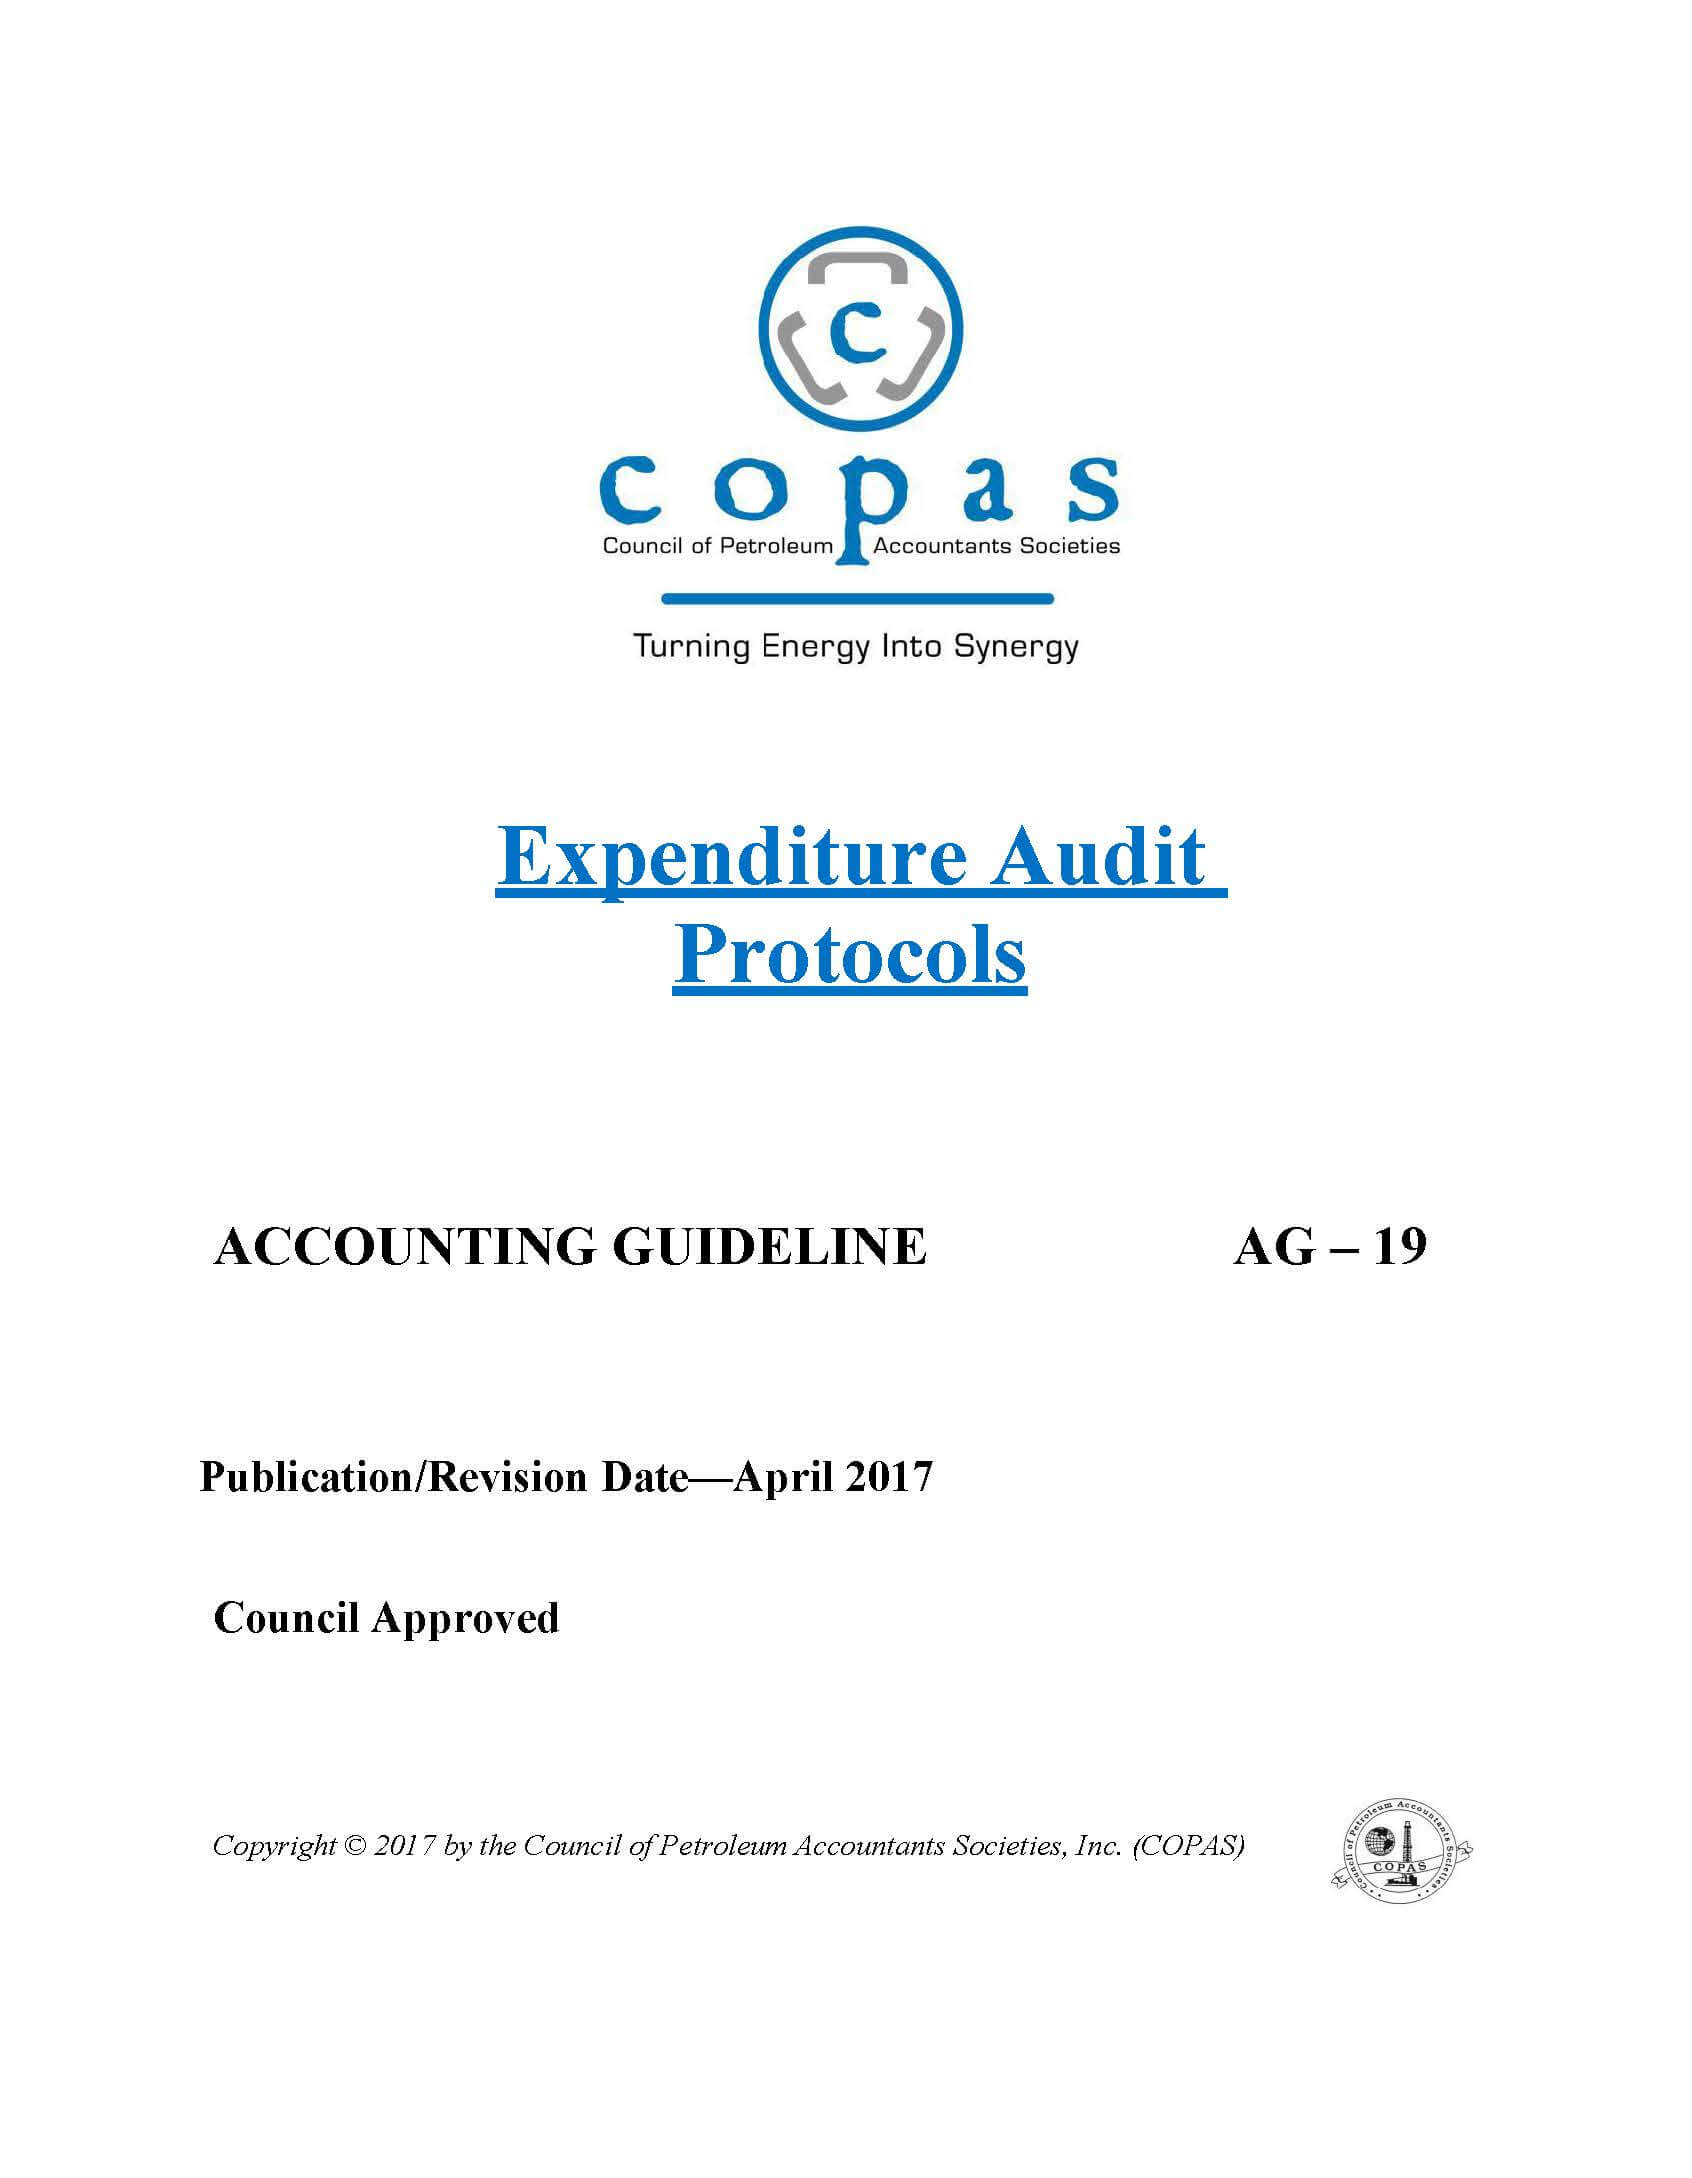 AG-19 Expenditure Audit Protocols